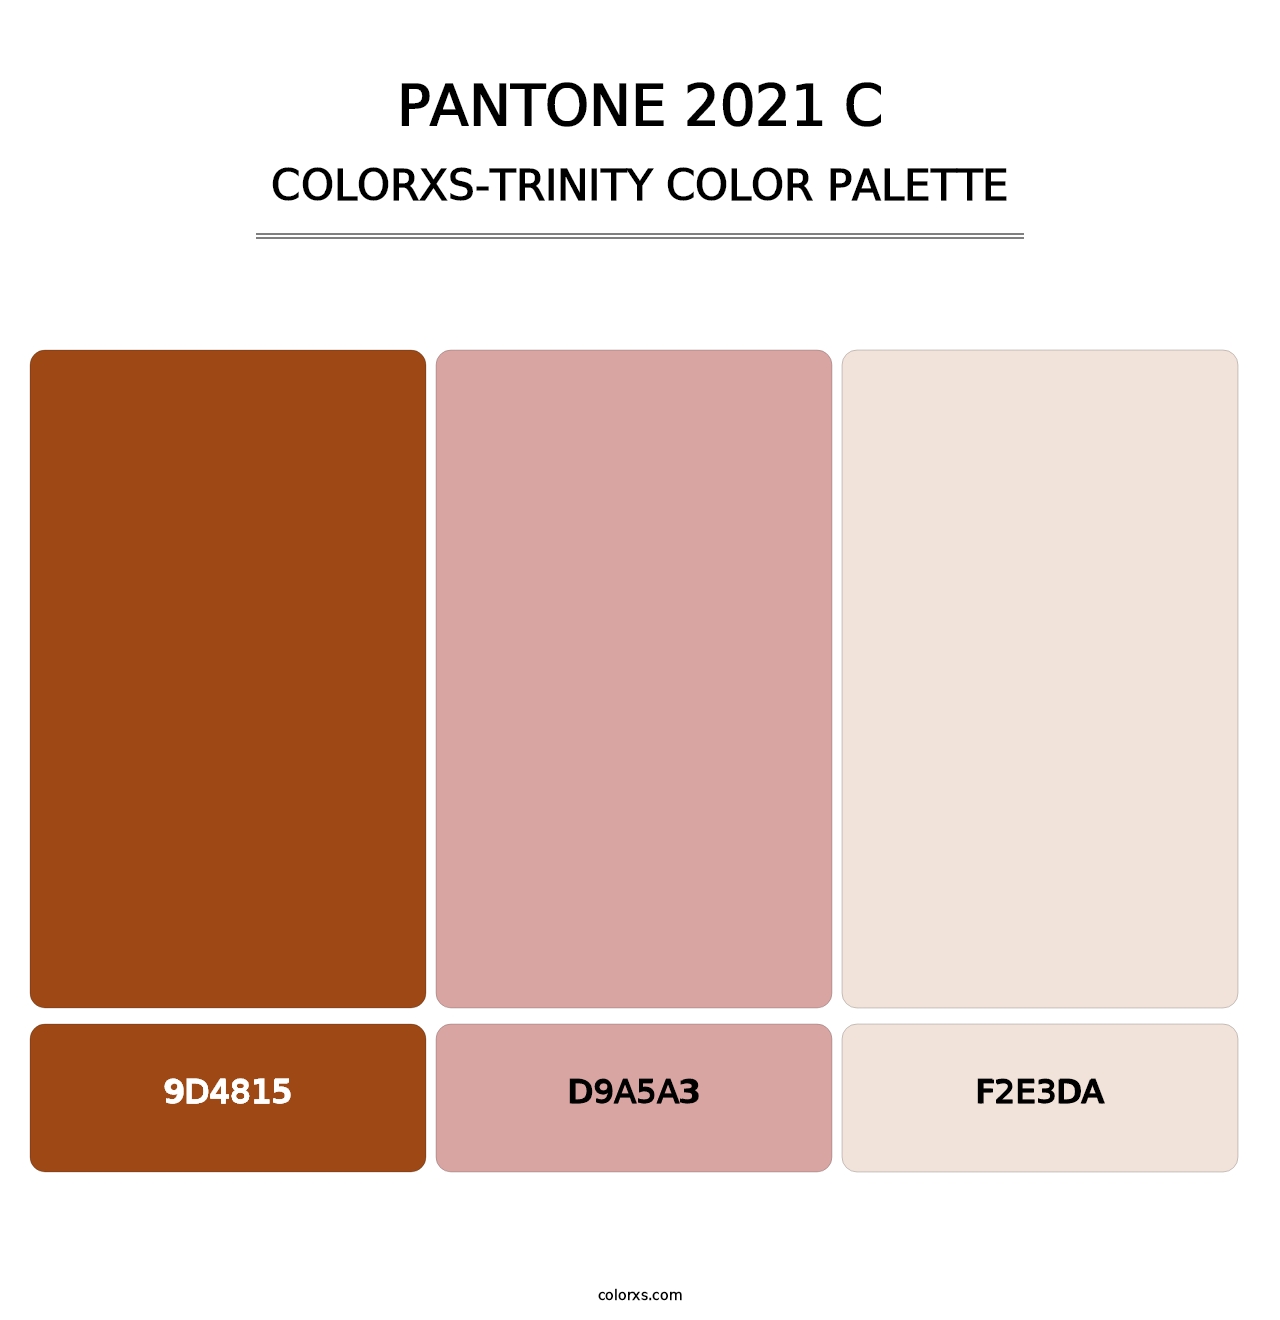 PANTONE 2021 C - Colorxs Trinity Palette